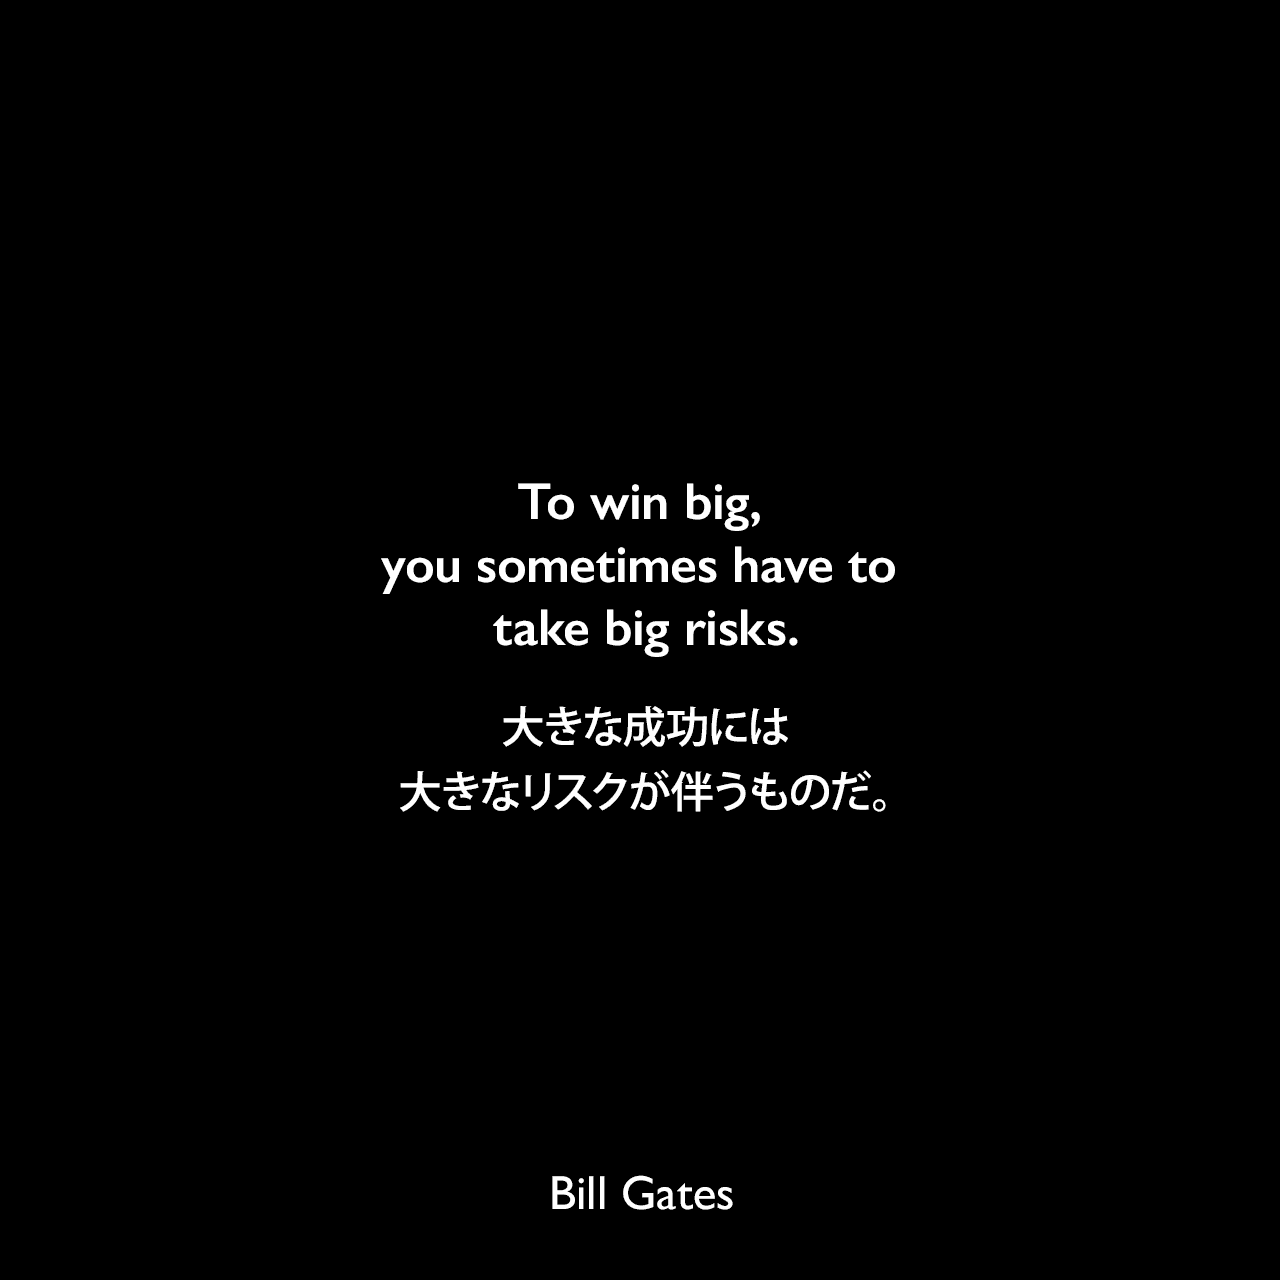 To win big, you sometimes have to take big risks.大きな成功には、大きなリスクが伴うものだ。Bill Gates